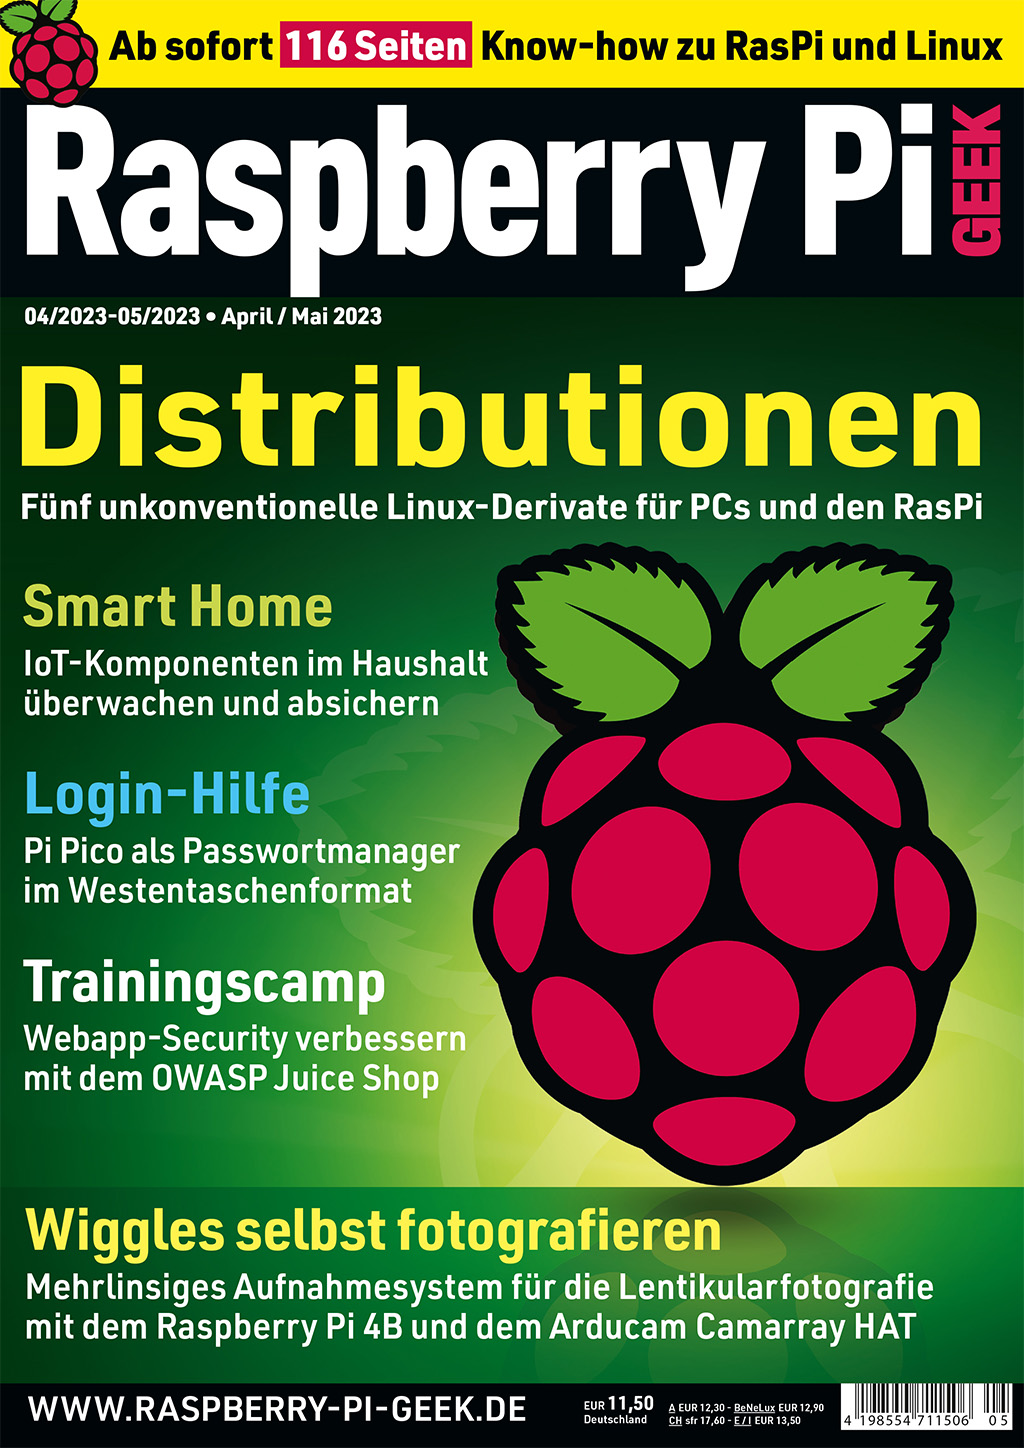 Raspberry Pi Geek Digital Jahresabo